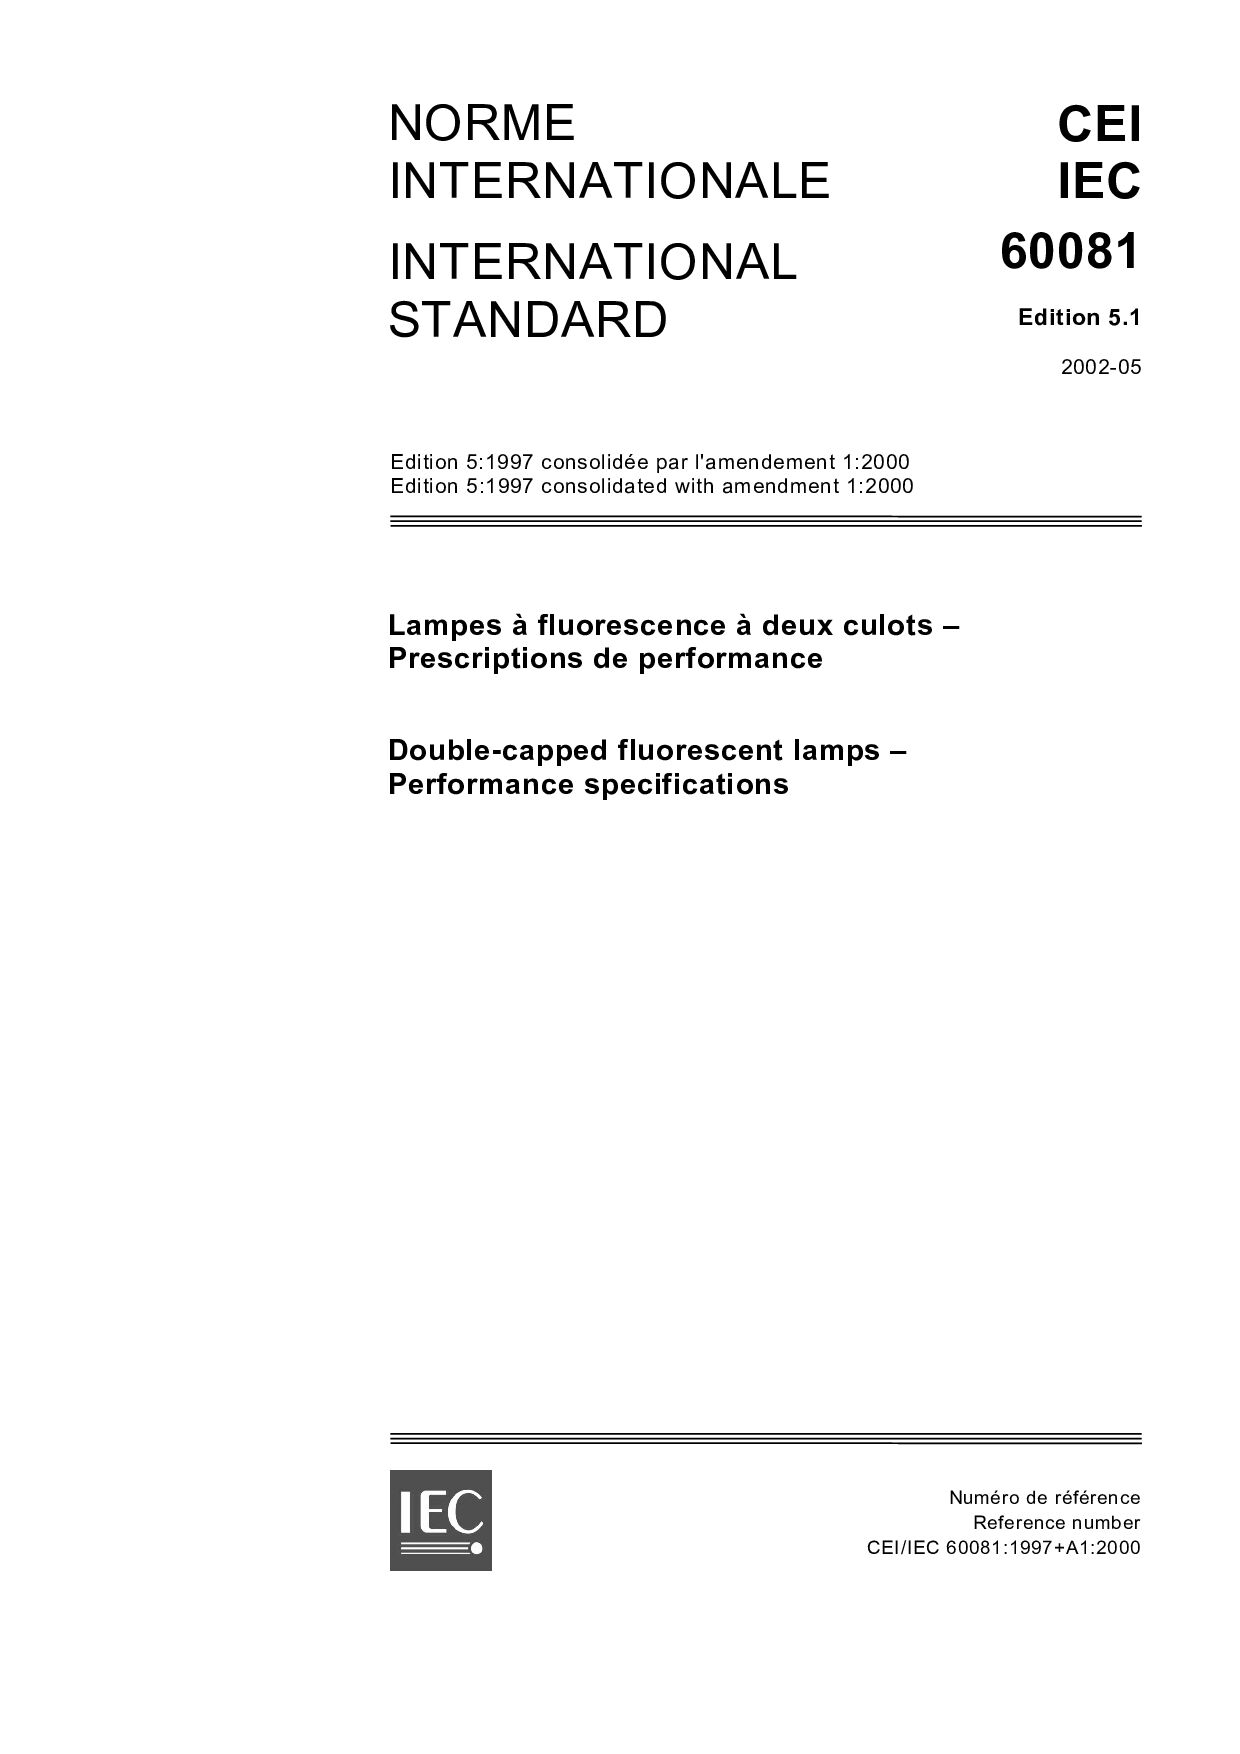 IEC 60081 Edition 5.1-2002